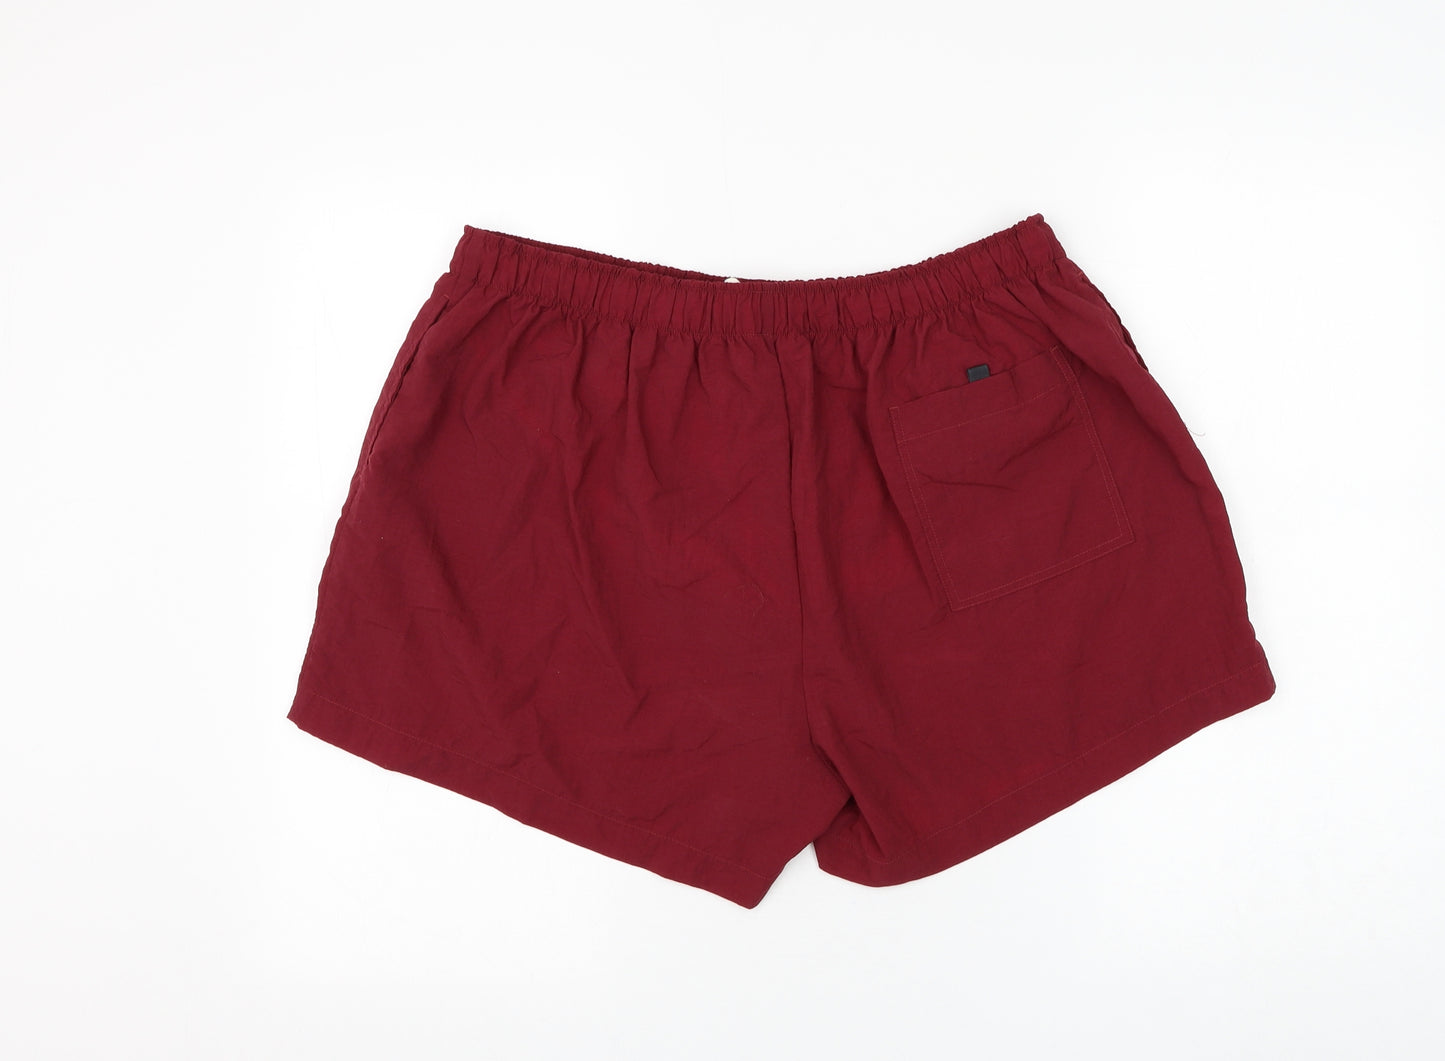 Beach Club Mens Red Nylon Sweat Shorts Size XL Regular Drawstring - Beach Club Swimwear